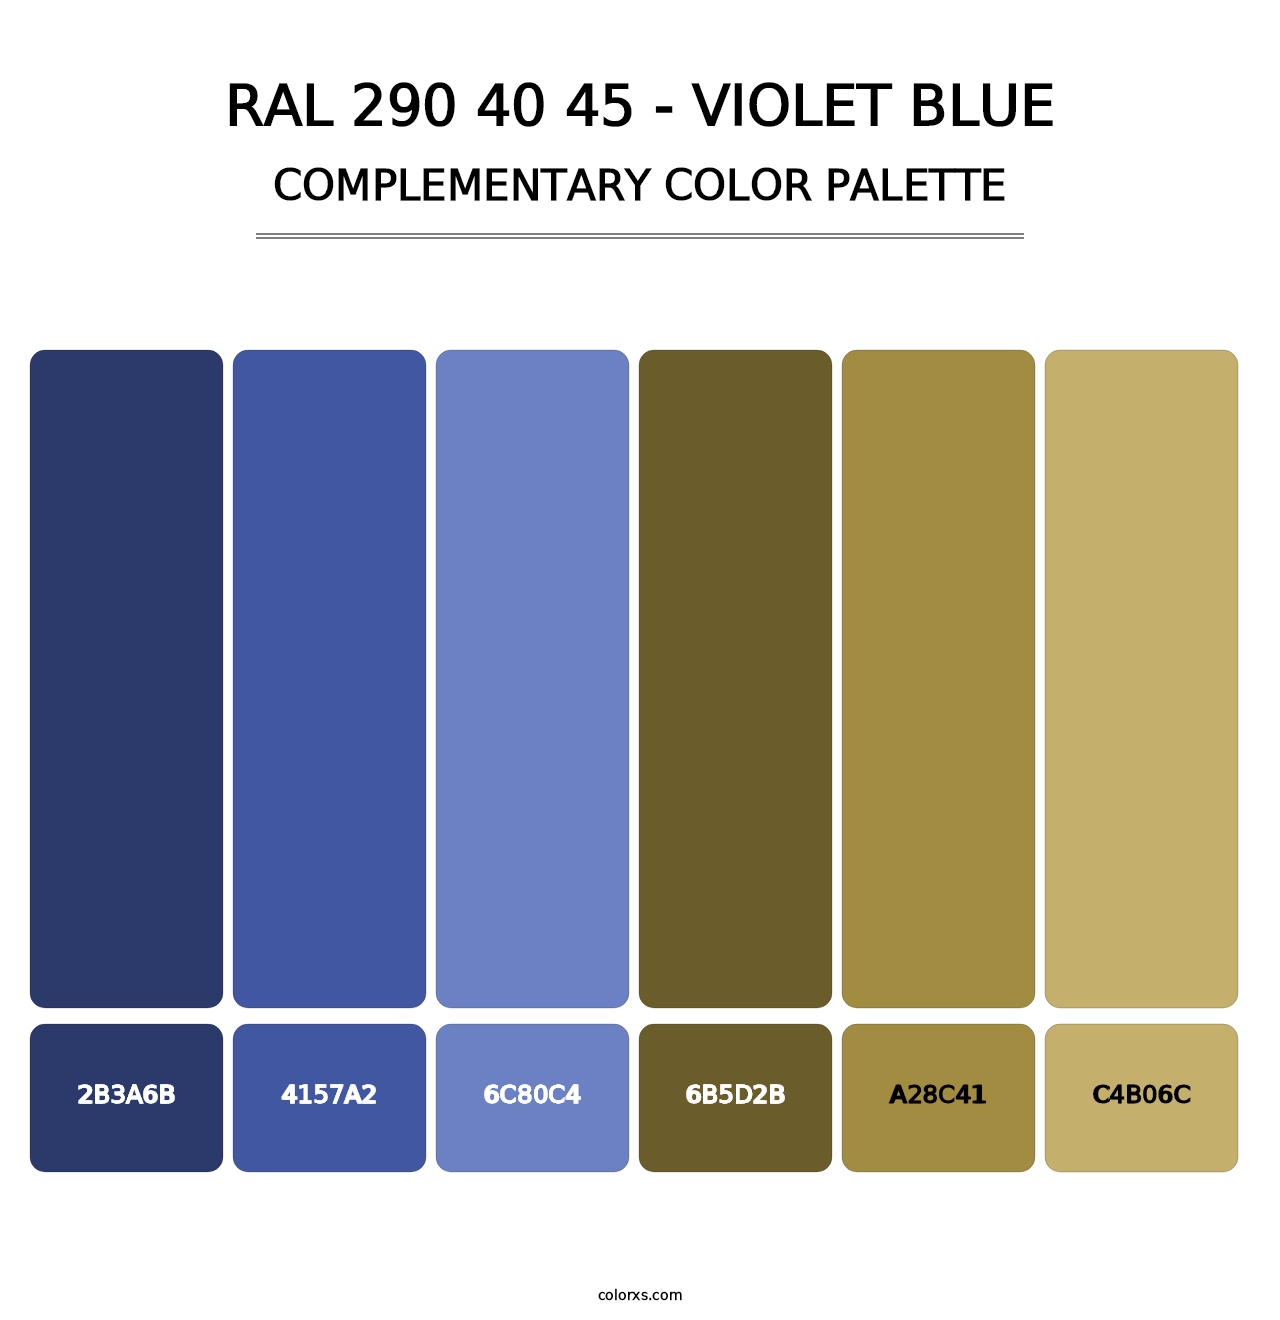 RAL 290 40 45 - Violet Blue - Complementary Color Palette